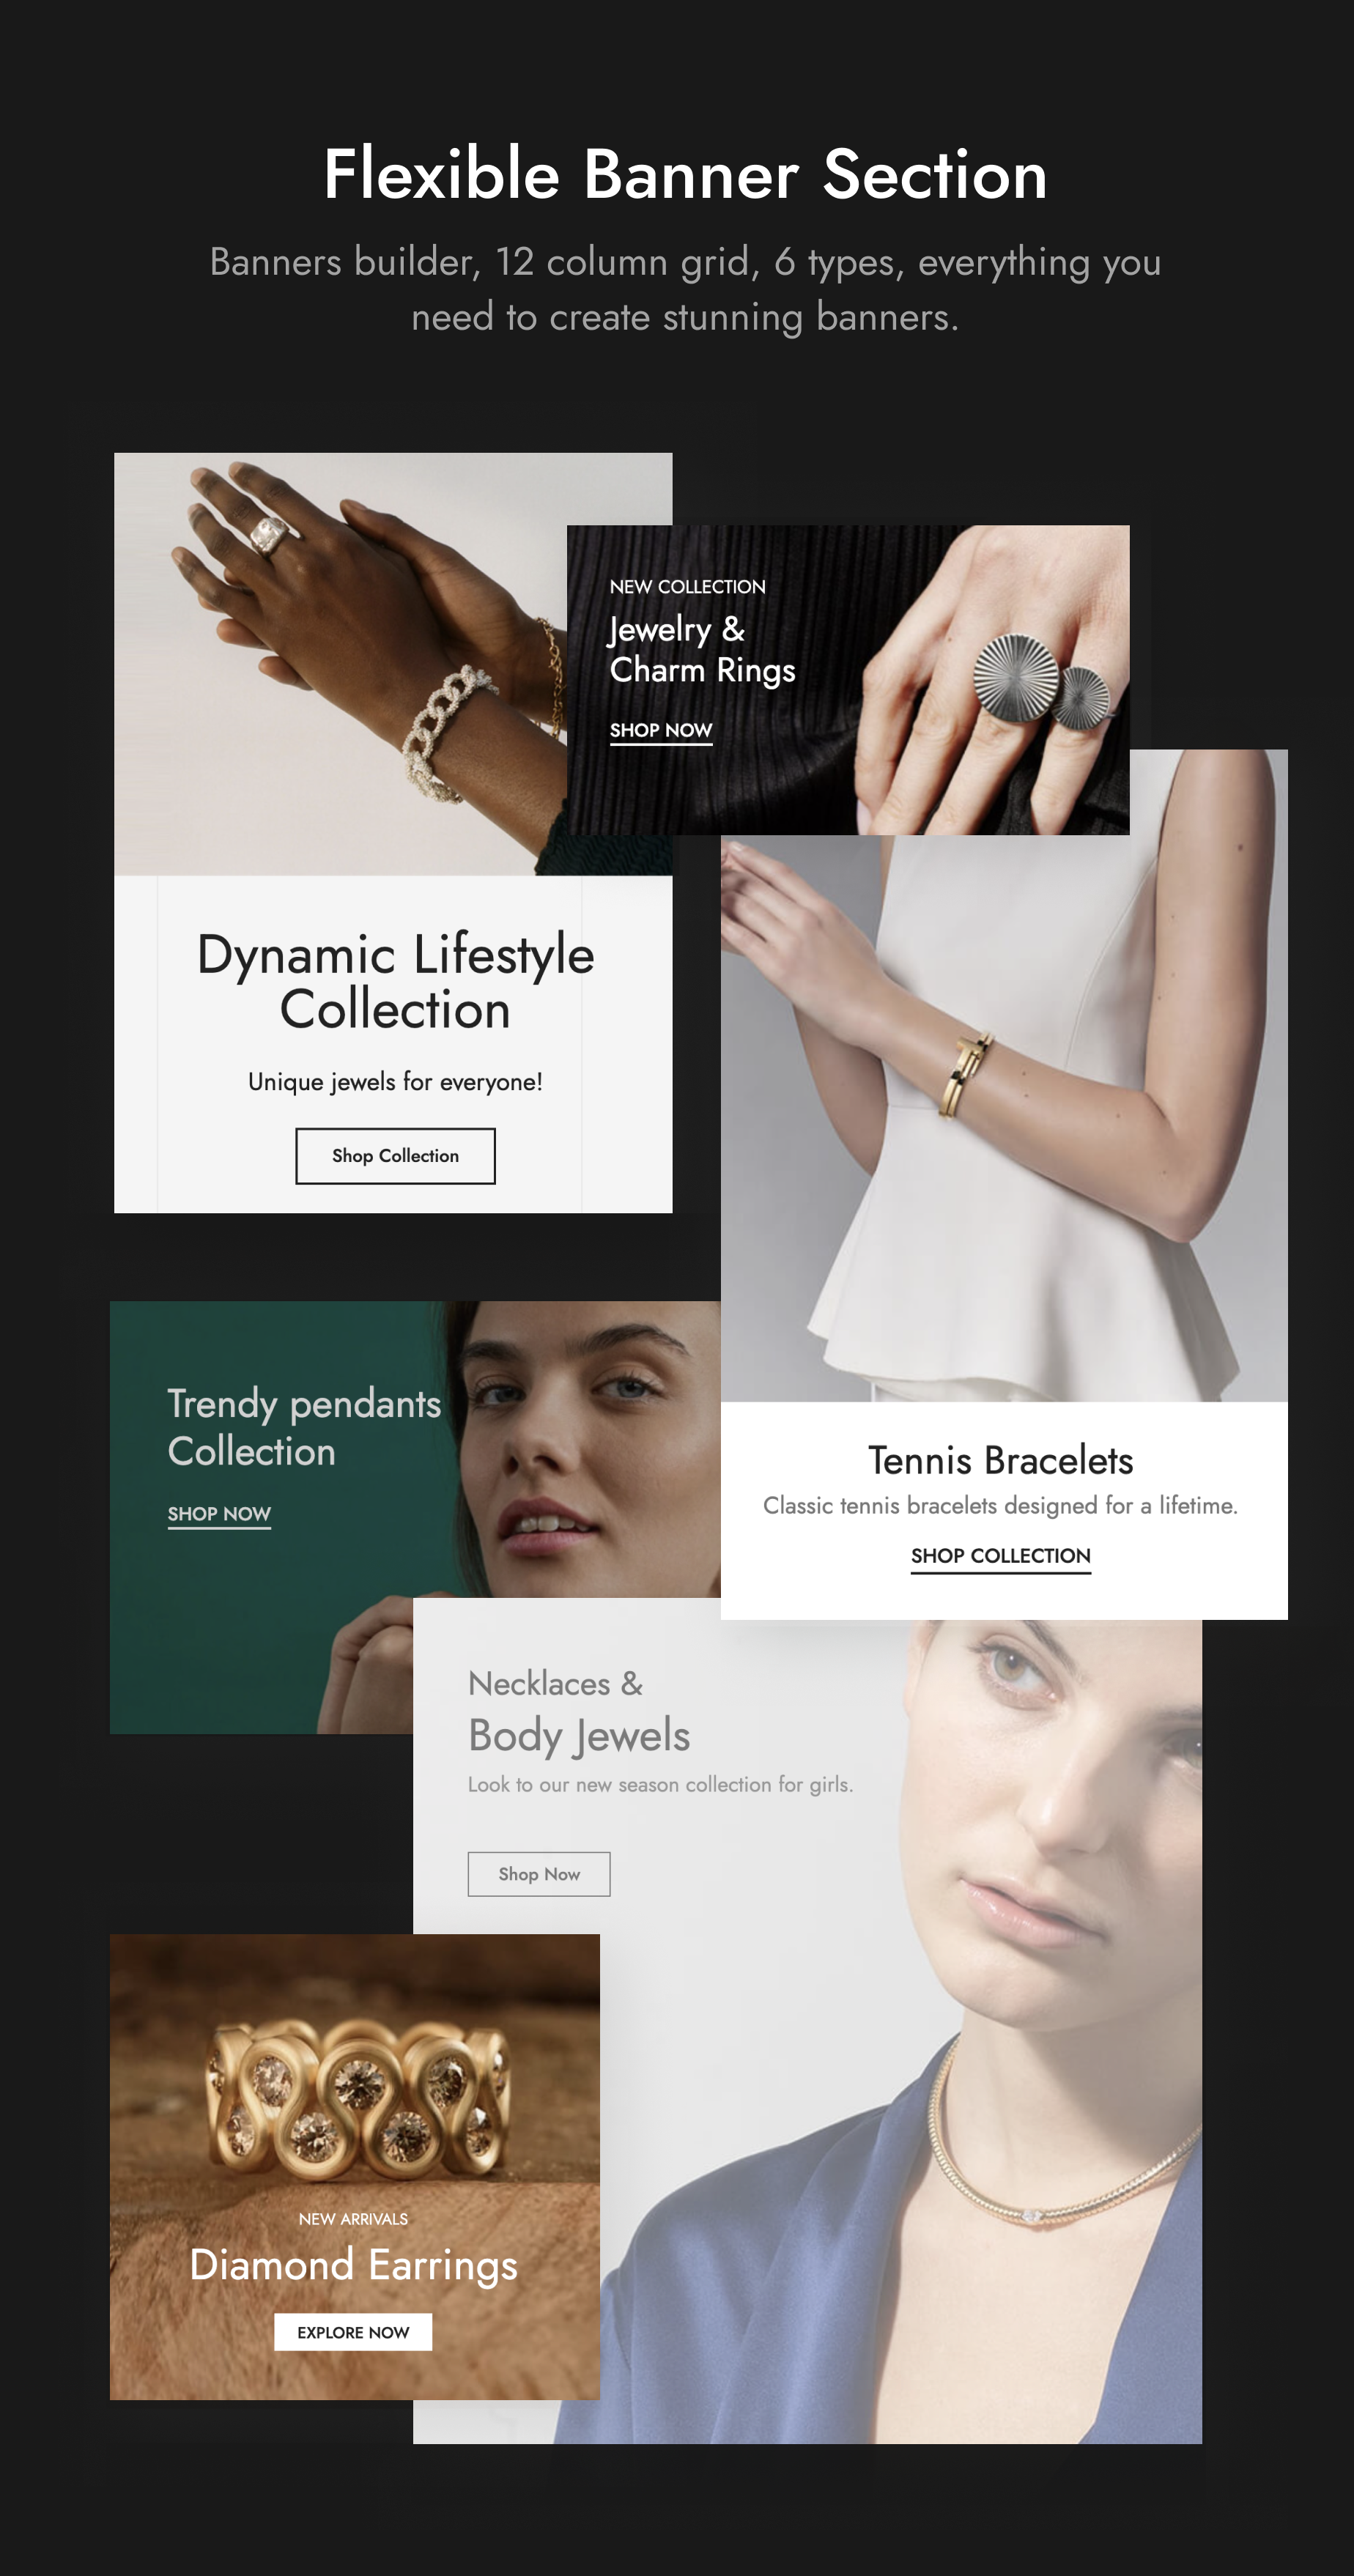 Alukas - Modern Jewelry Store WordPress Theme